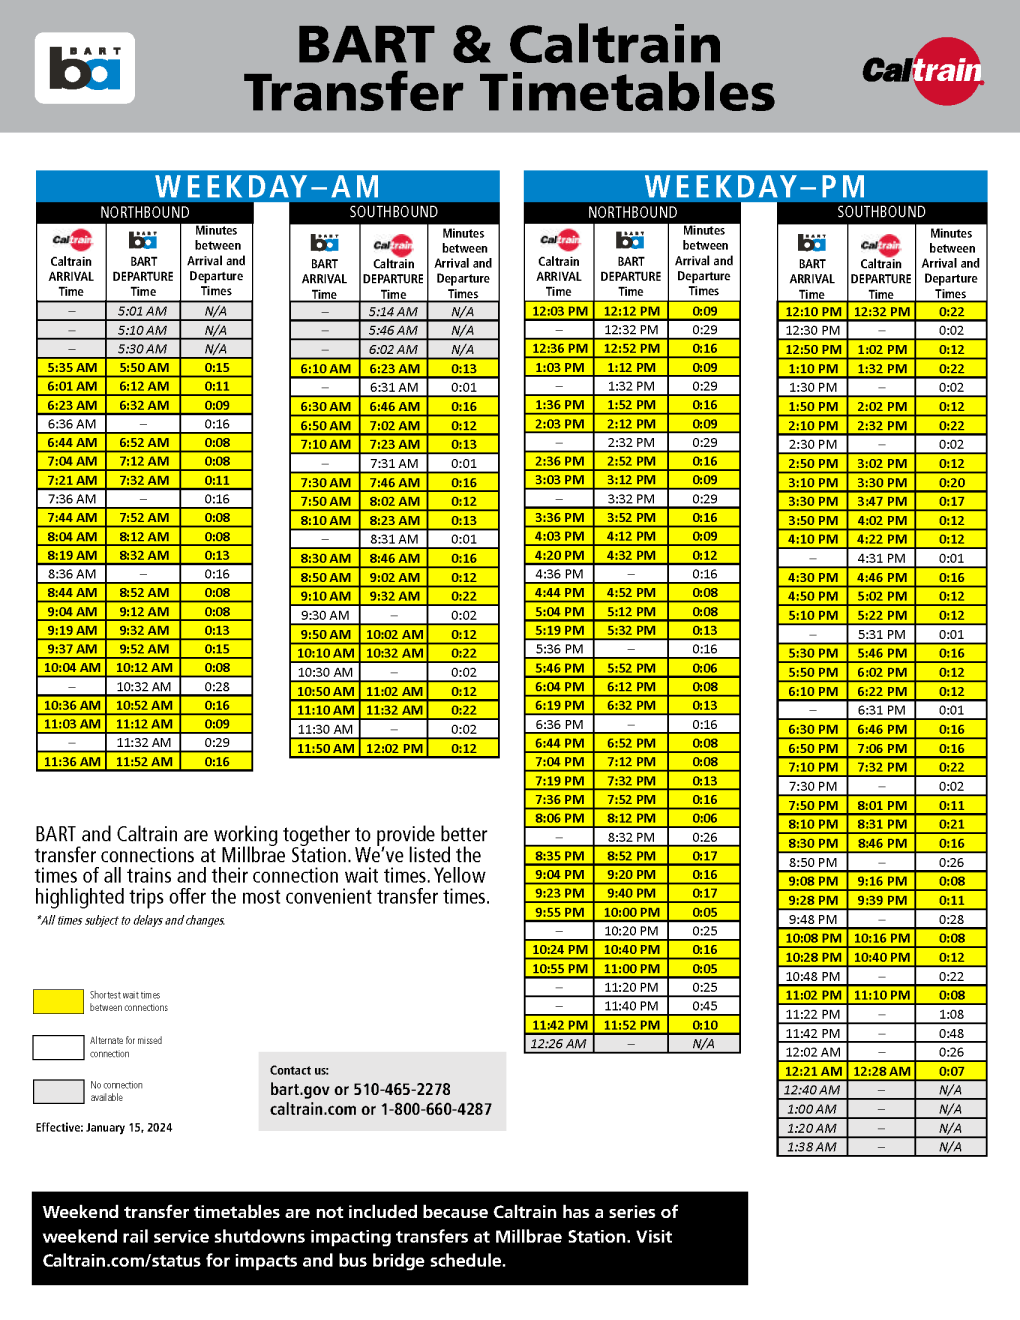 BART and Caltrain Transfer Timetable Jan 2024.